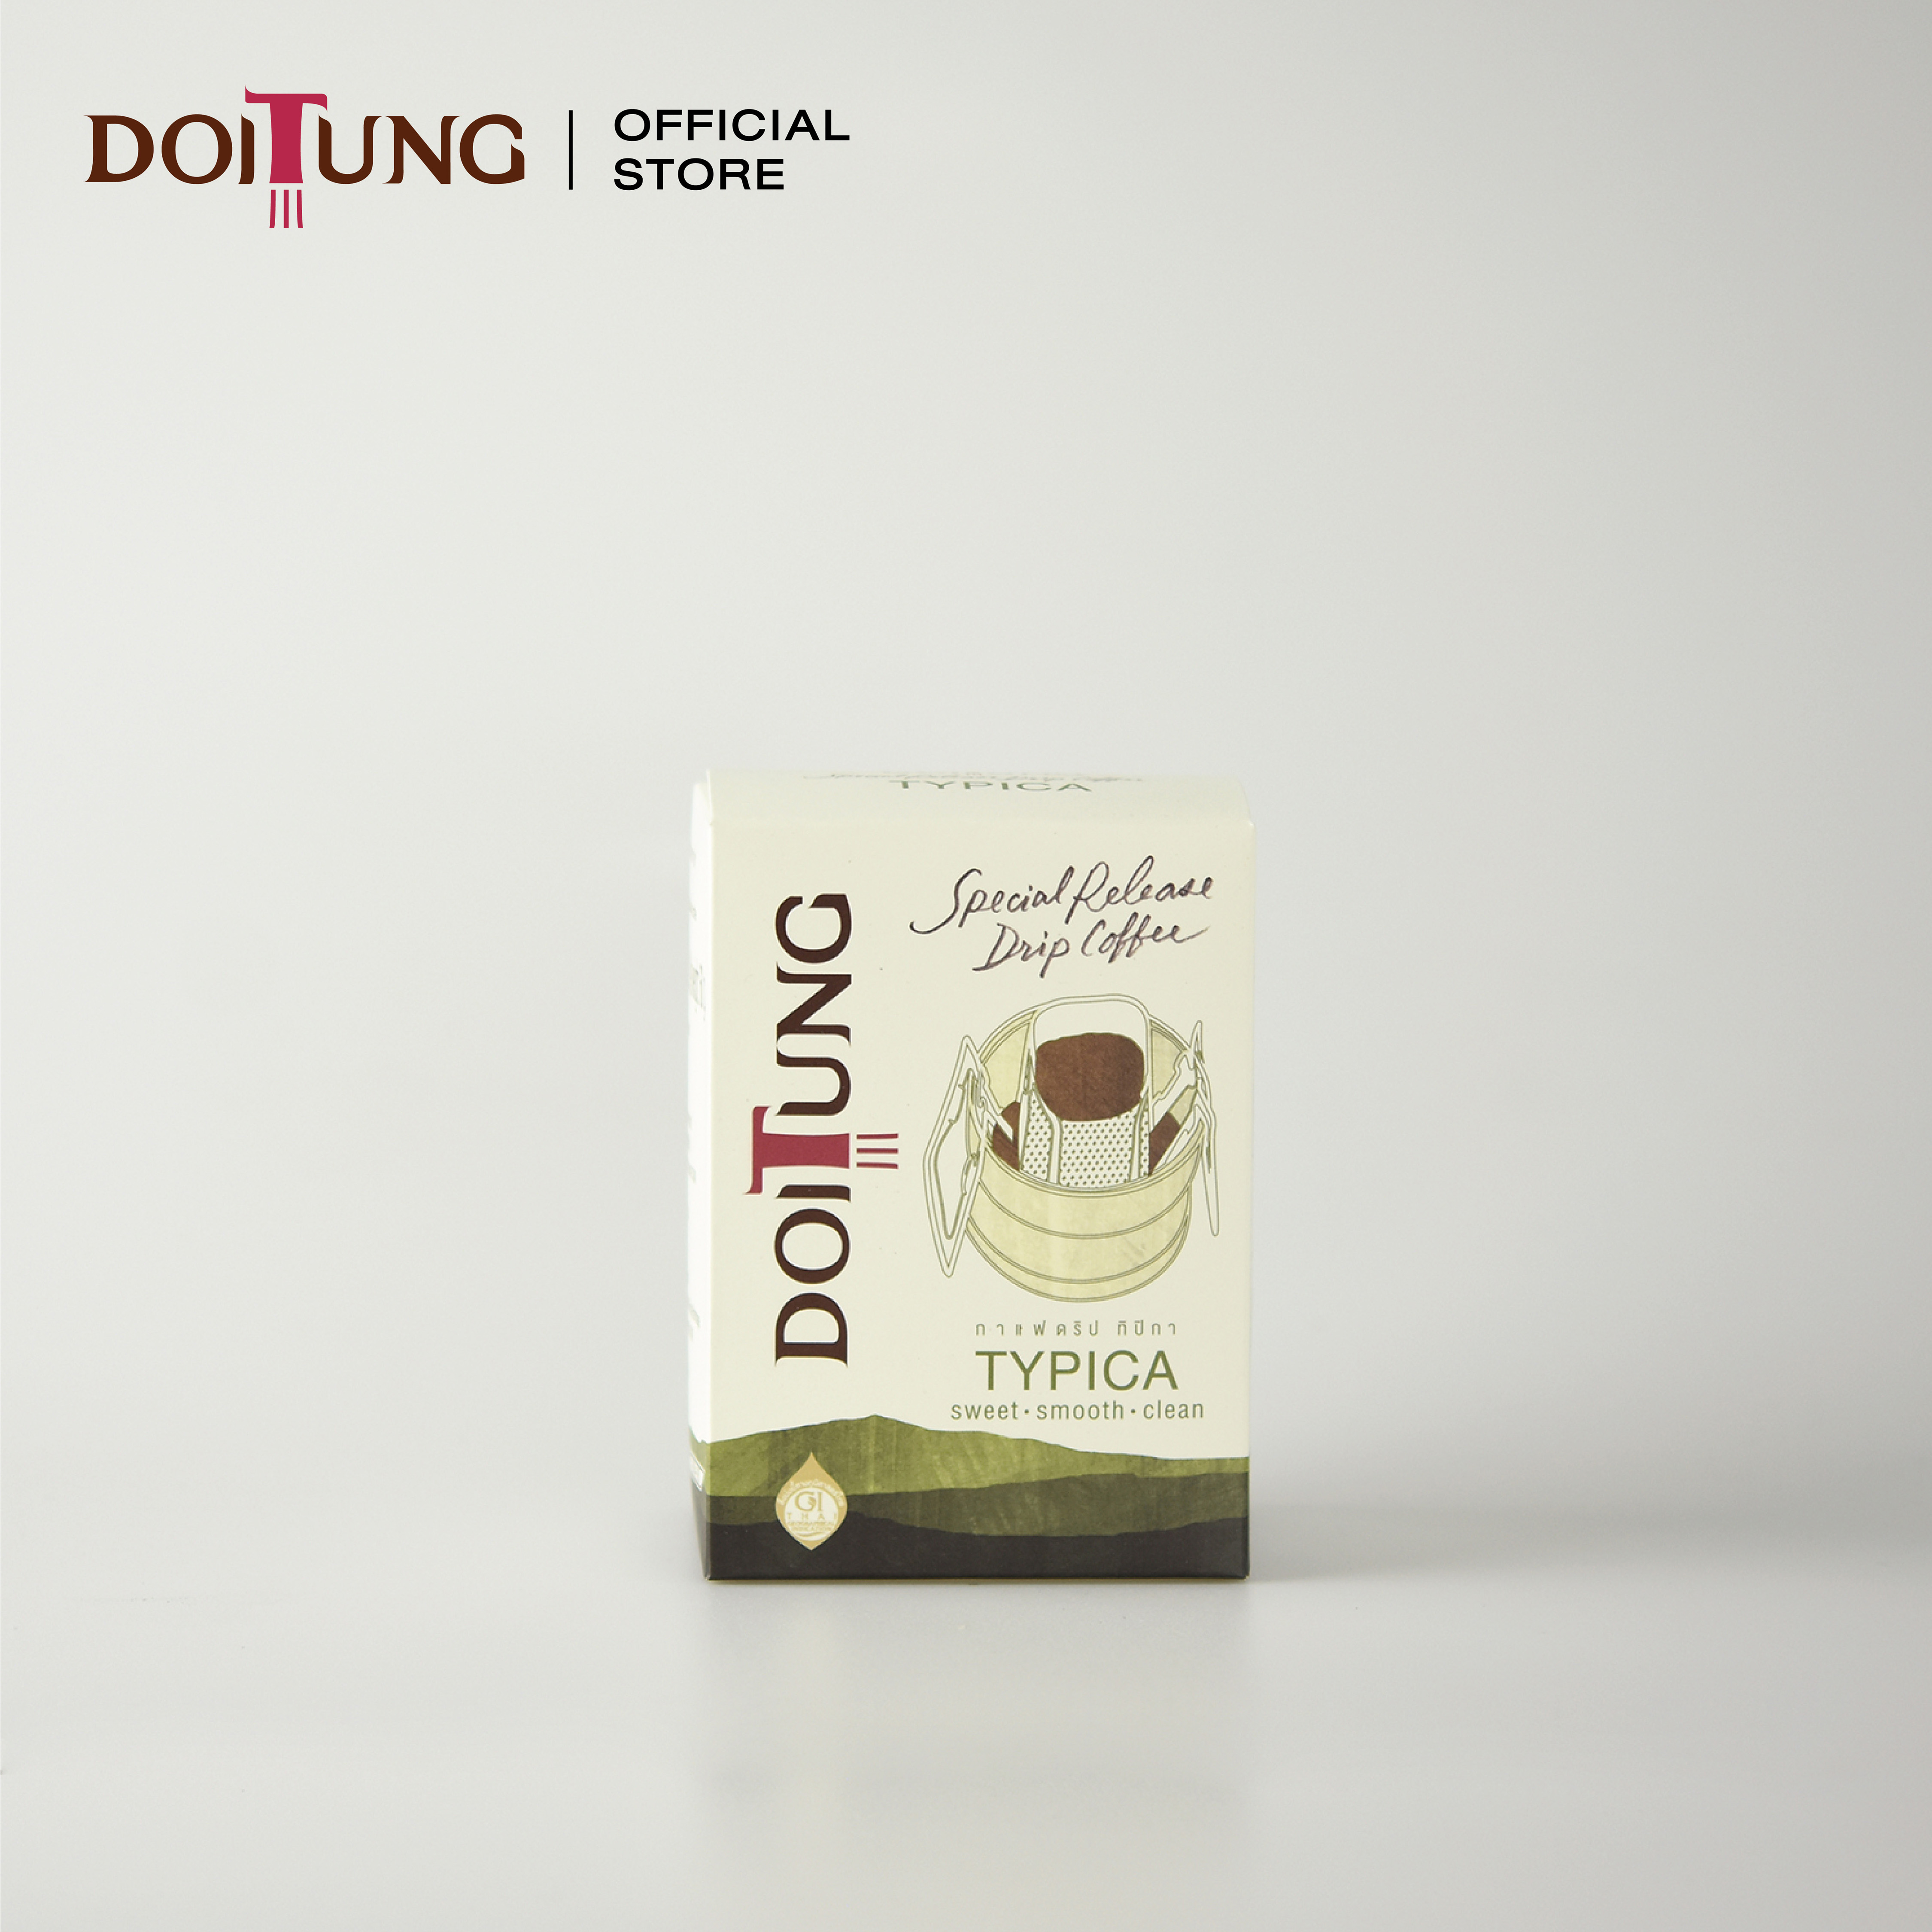 DoiTung Drip Coffee - Typica (60 g.) กาแฟ ดริป ทิปปิก้า ดอยตุง